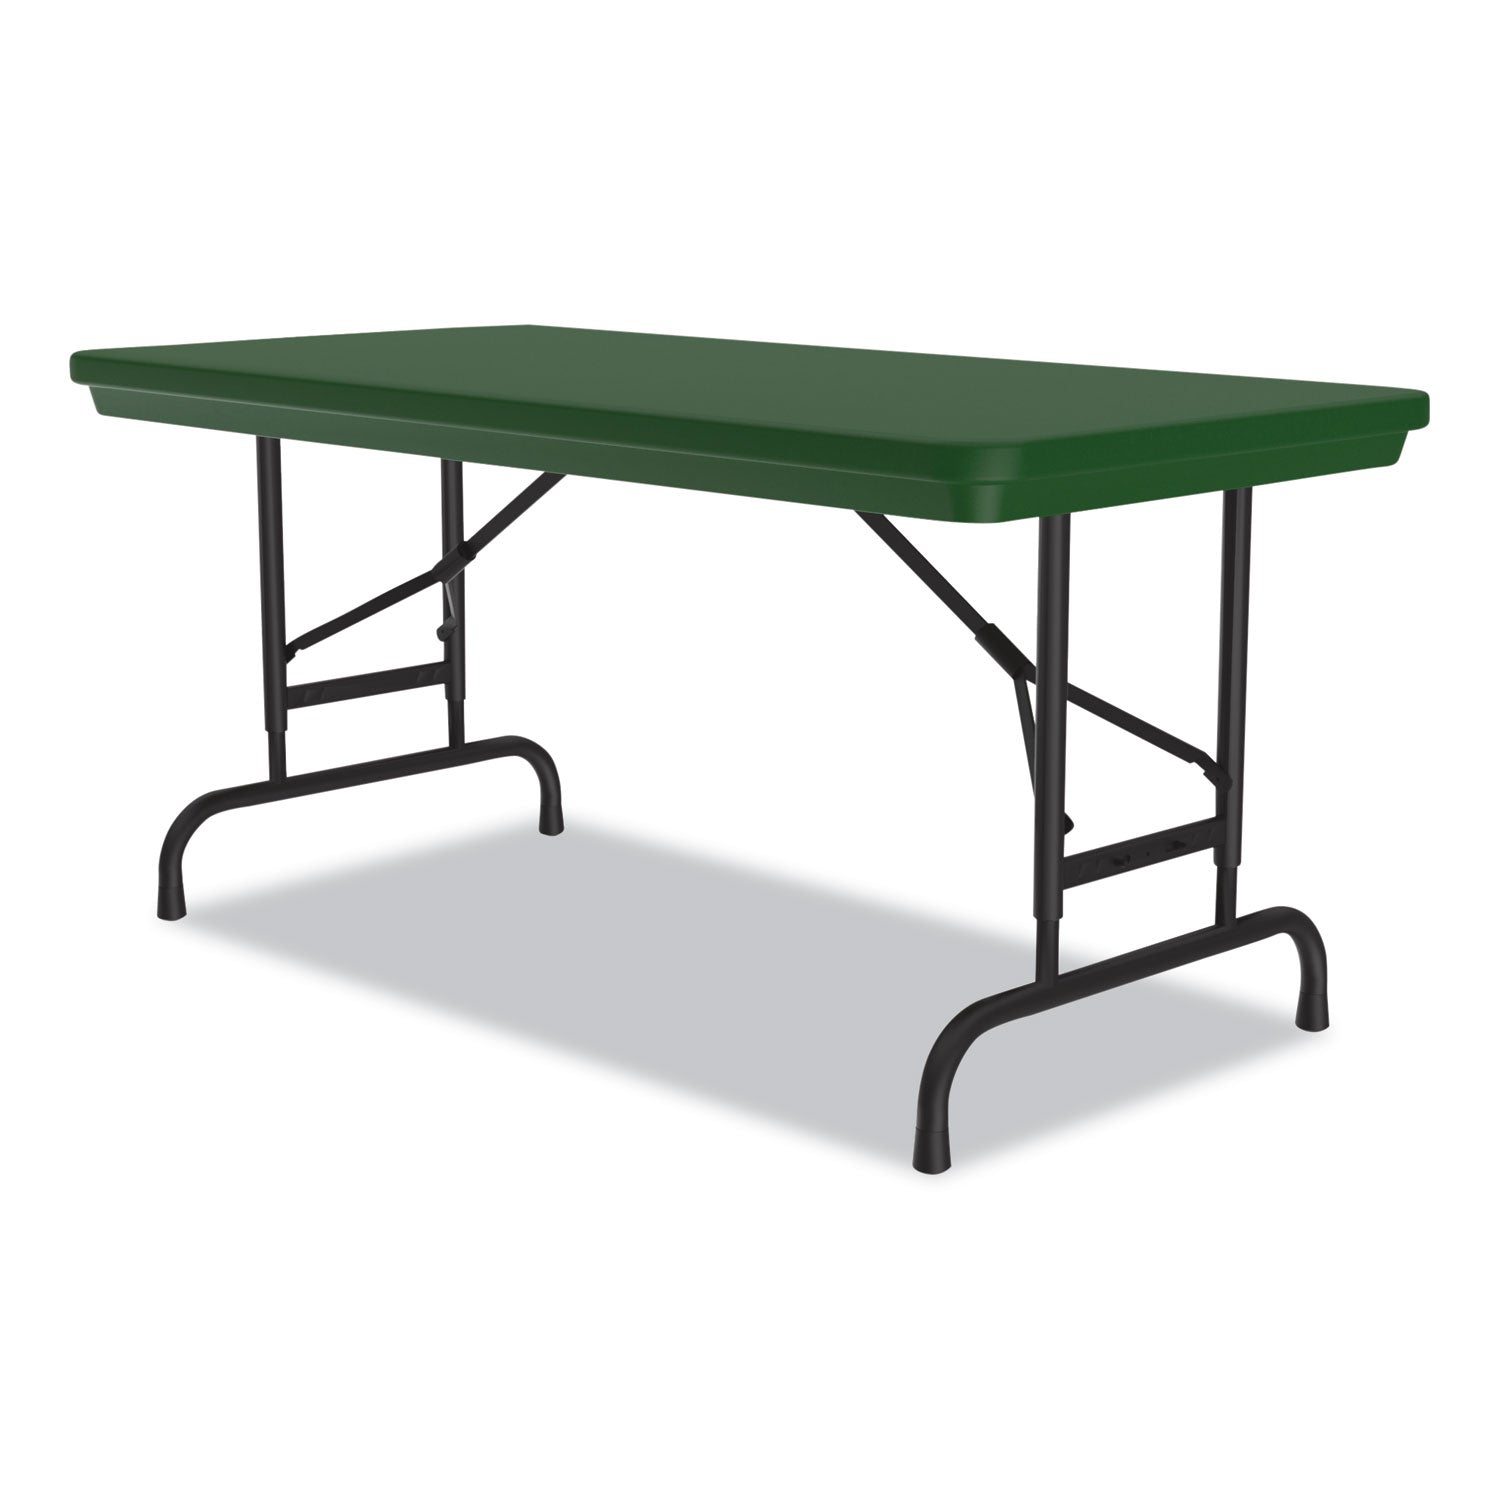 adjustable-folding-table-rectangular-48-x-24-x-22-to-32-green-top-black-legs-4-pallet-ships-in-4-6-business-days_crlra2448294p - 3